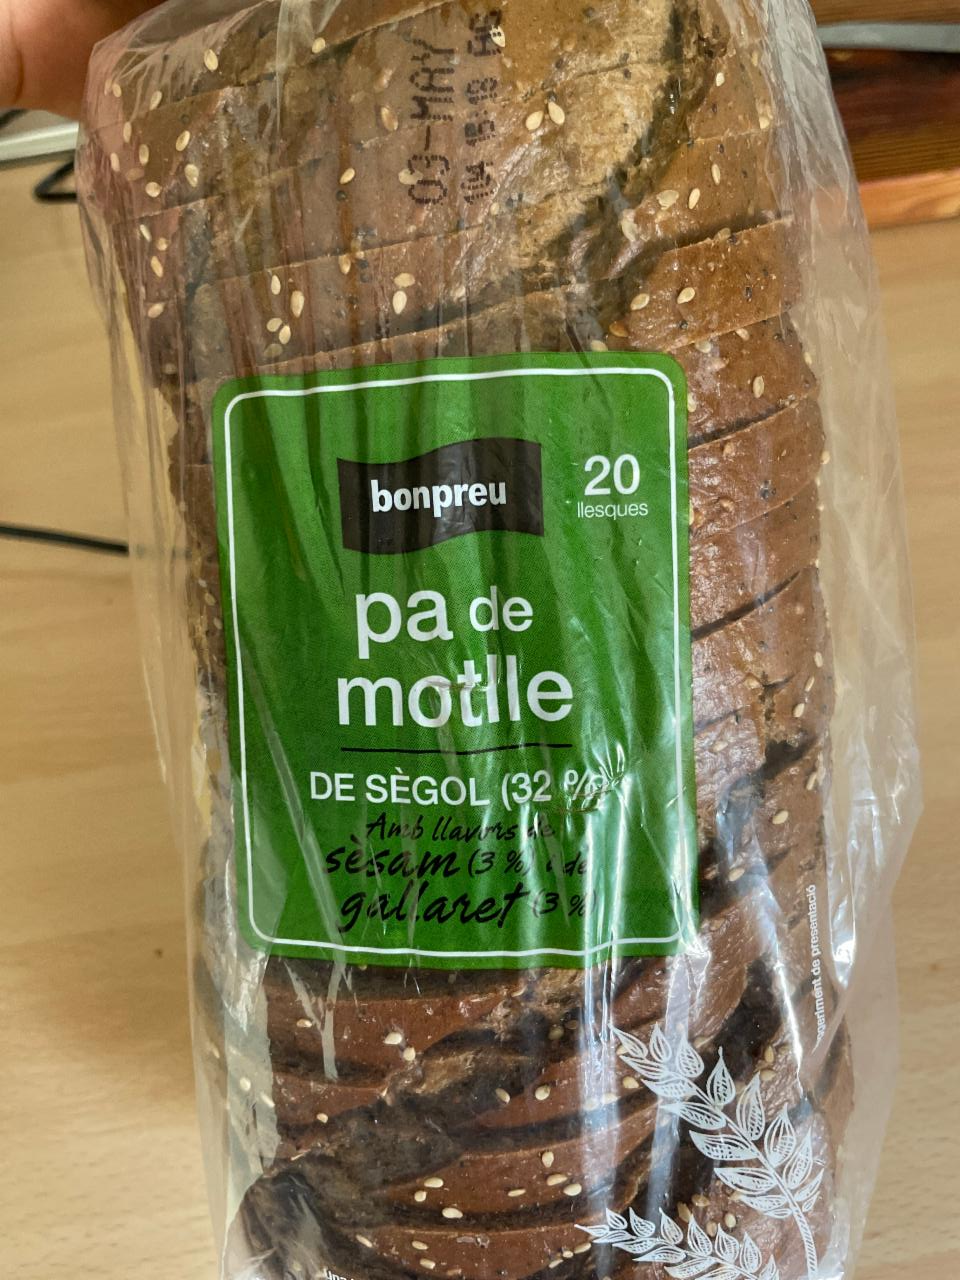 Фото - хлеб зерновой pa de motlle Bonpreu